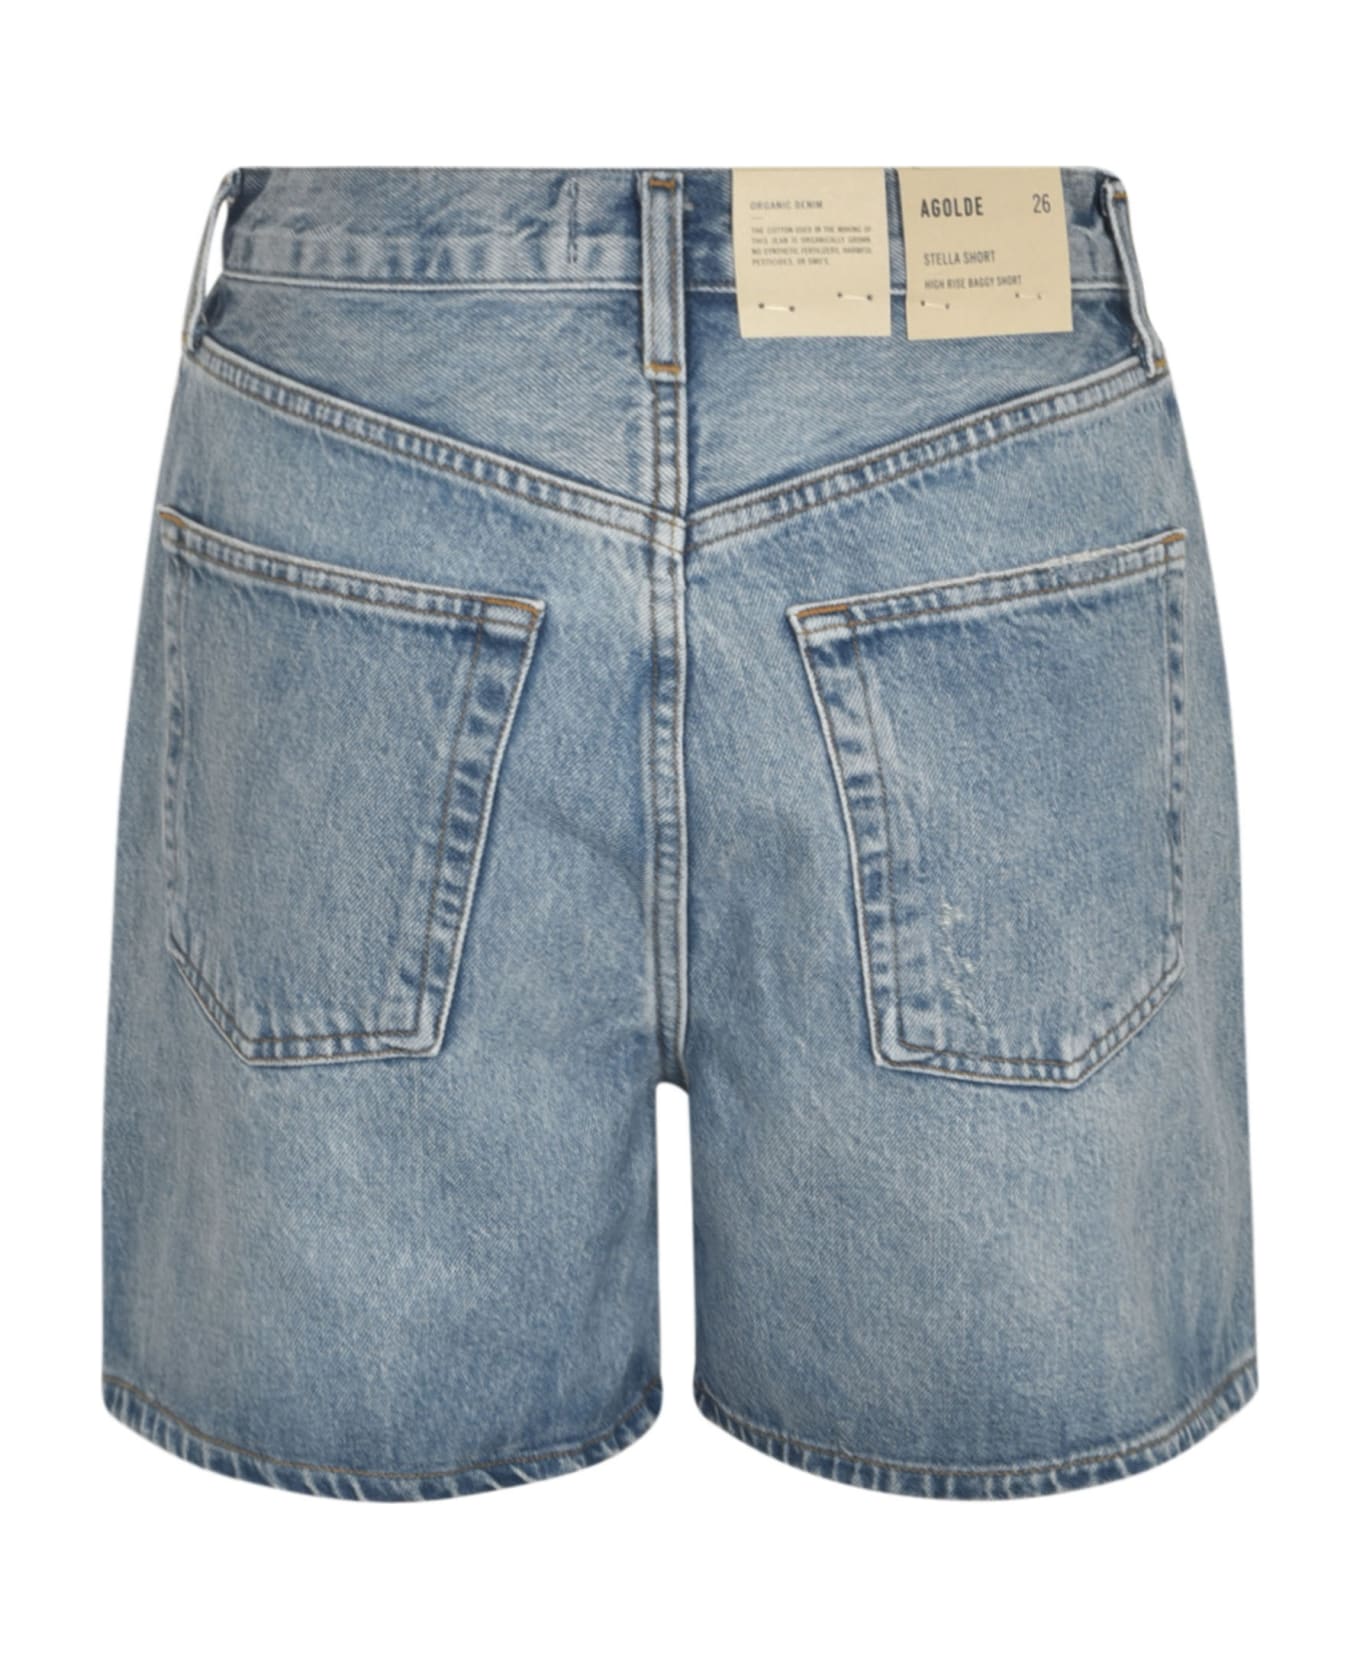 AGOLDE Buttoned Denim Shorts - MODE